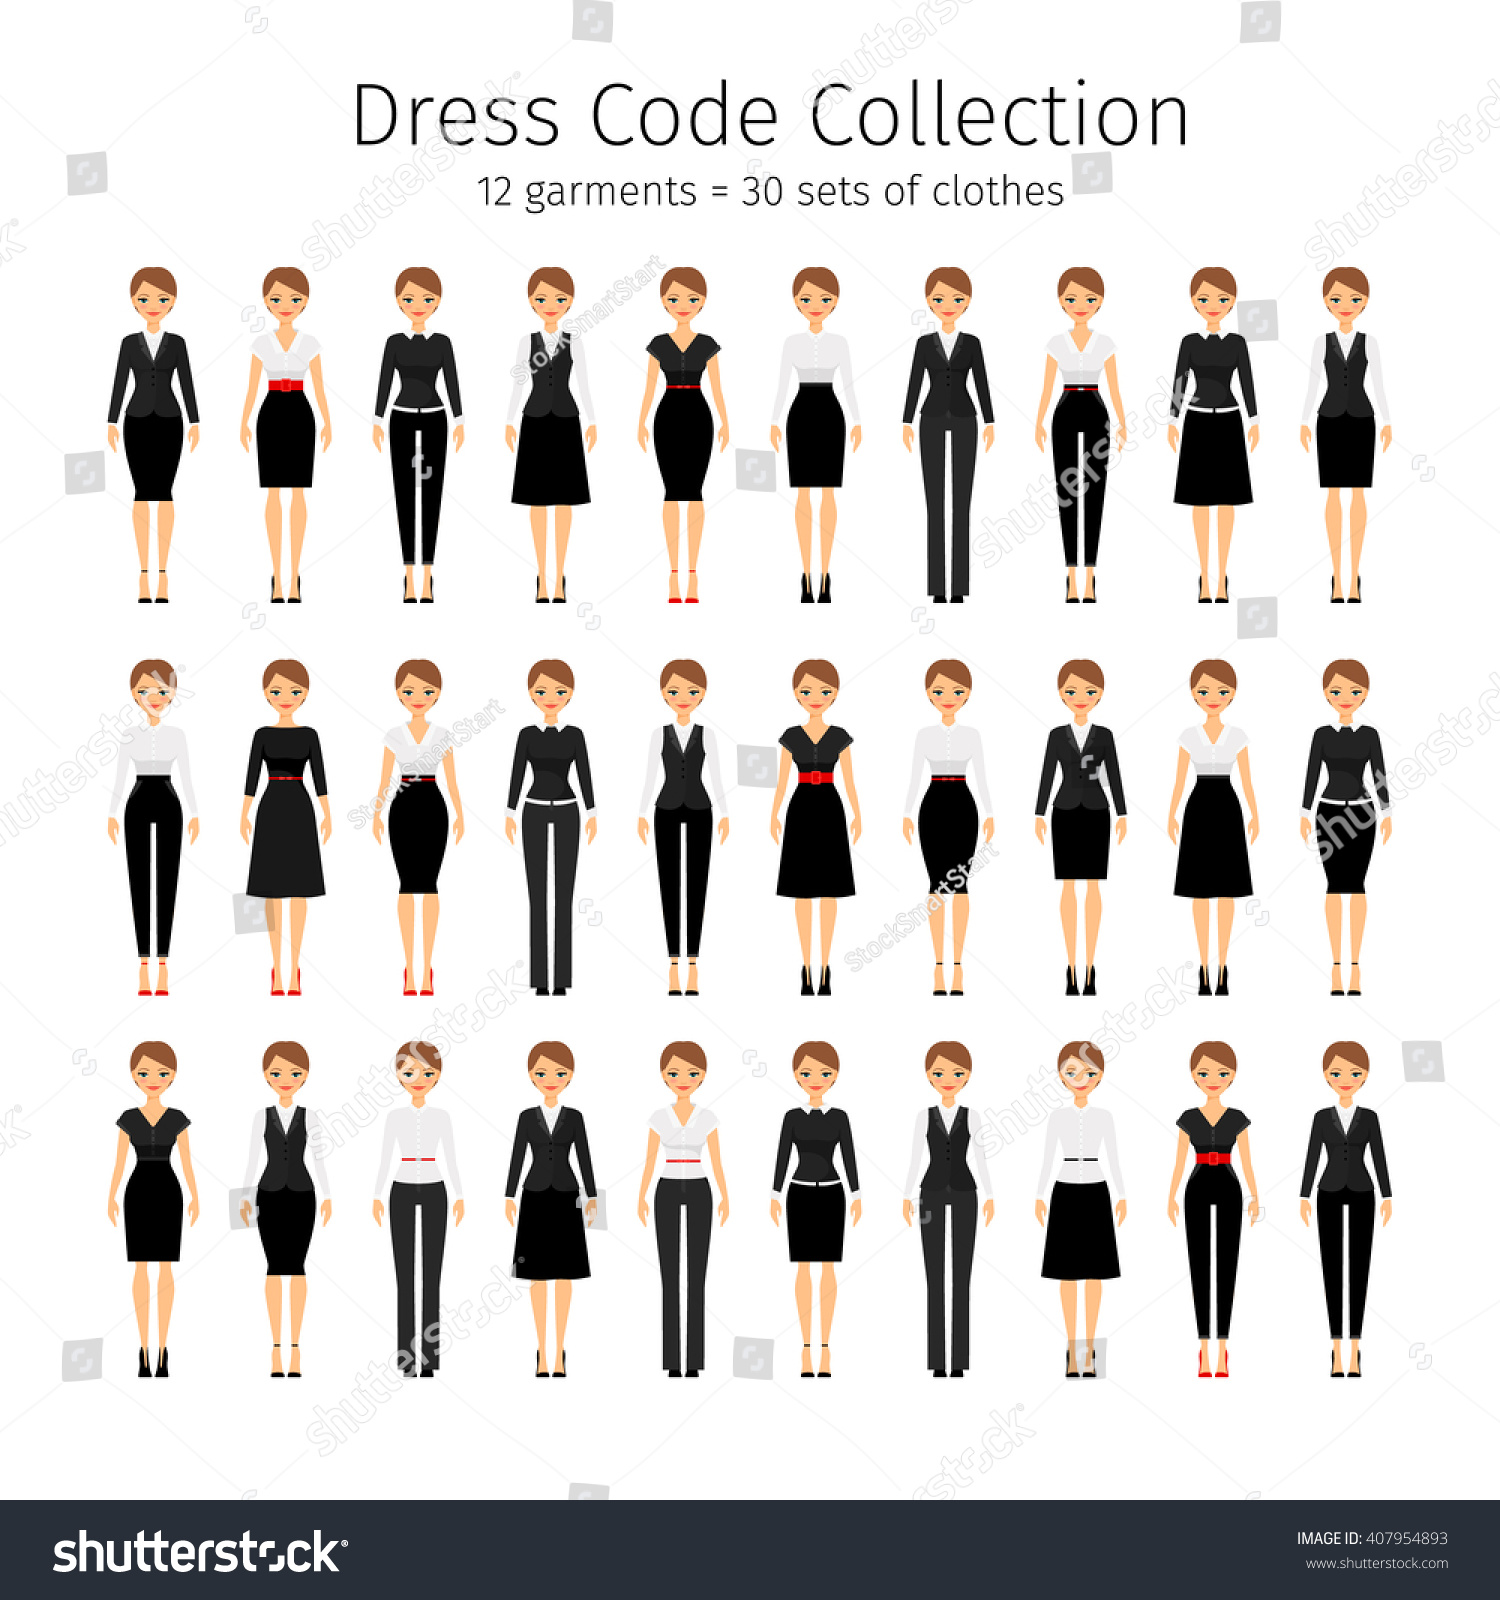 Business Woman Collection Women Dress Code Stock Vector 407954893 ...